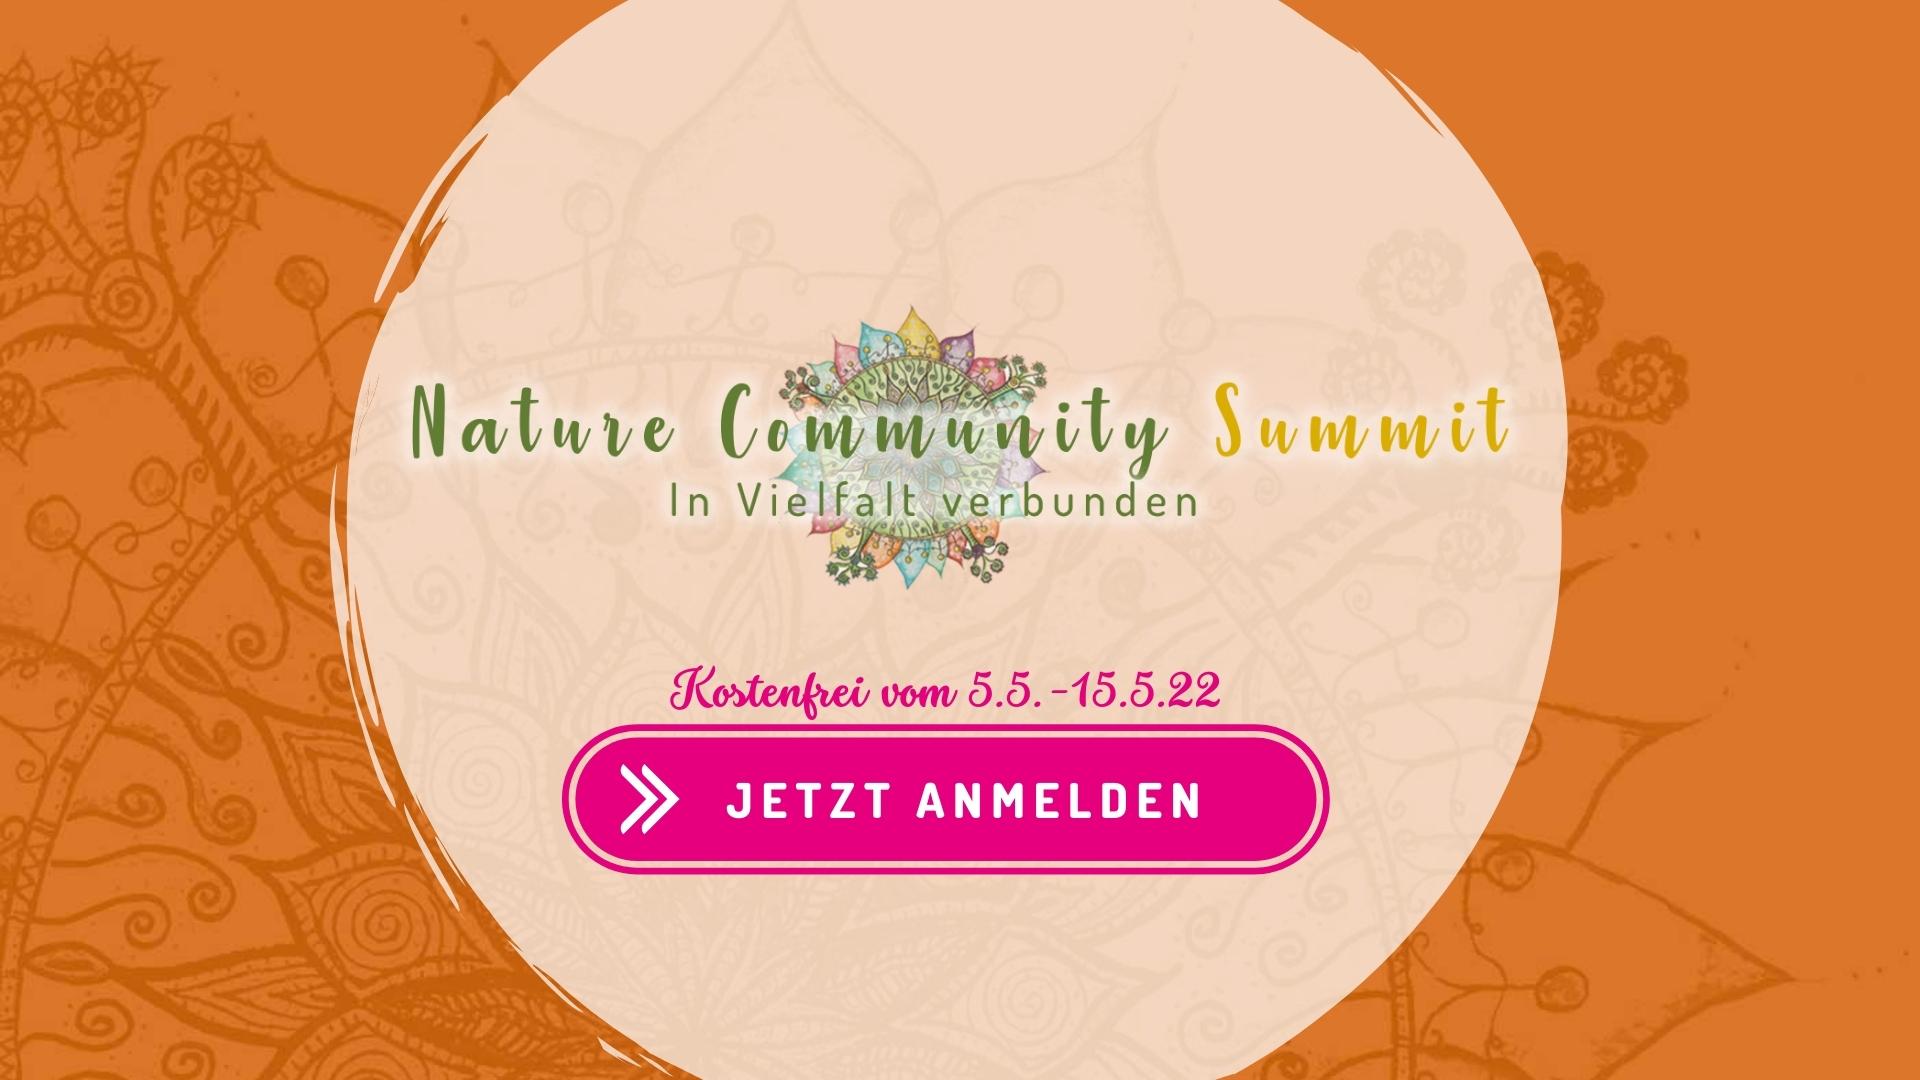 Nature Community Online Summit